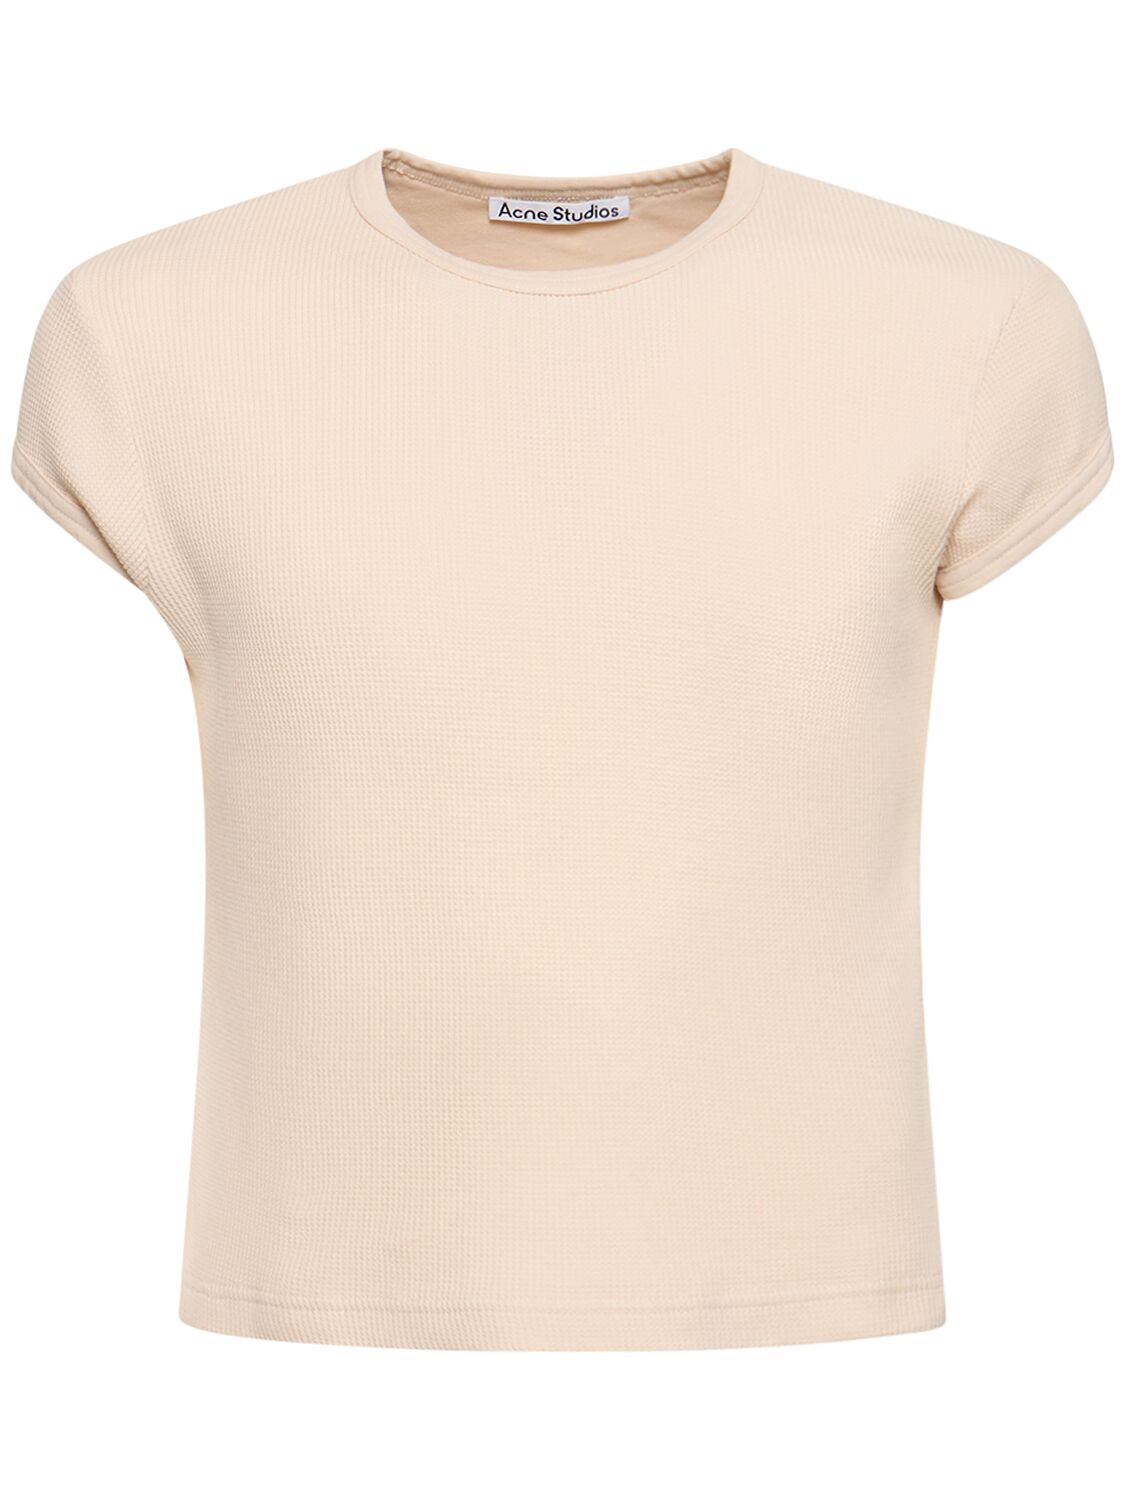 Acne Studios Cotton Jersey Short Sleeve T-shirt In Light Beige